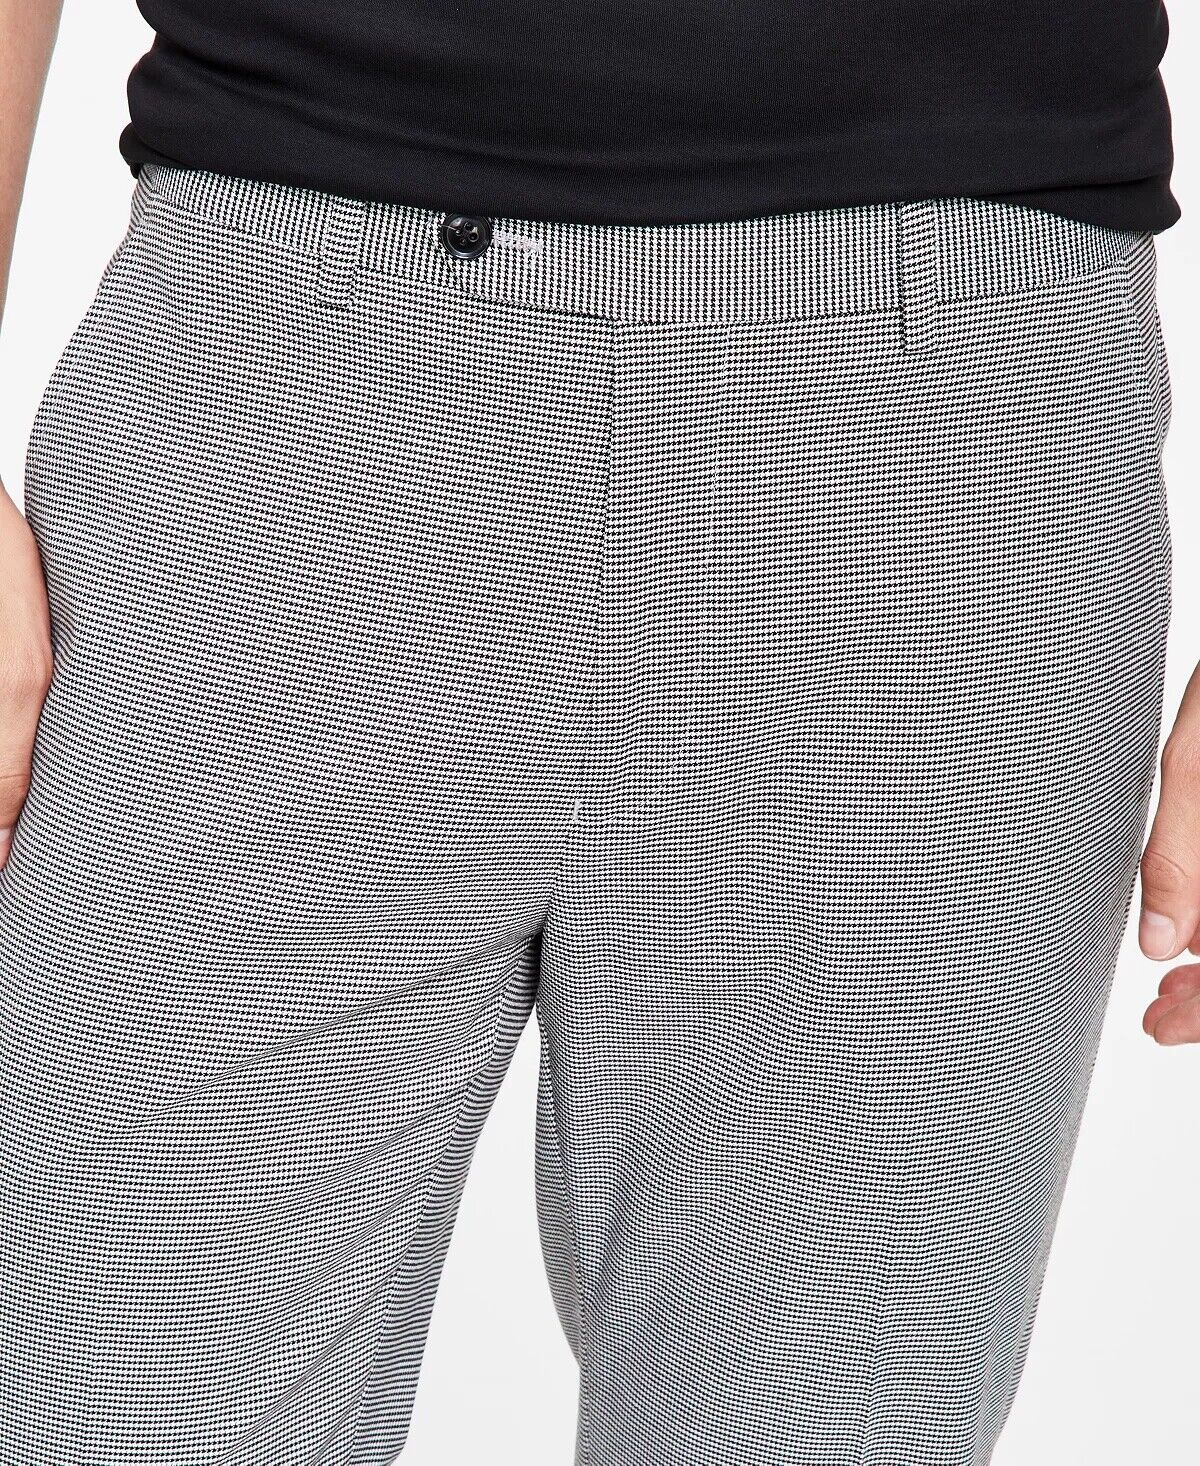 ALFANI Men's Slim-Fit Black & White Pattern Suit Dress Pants 29x 30